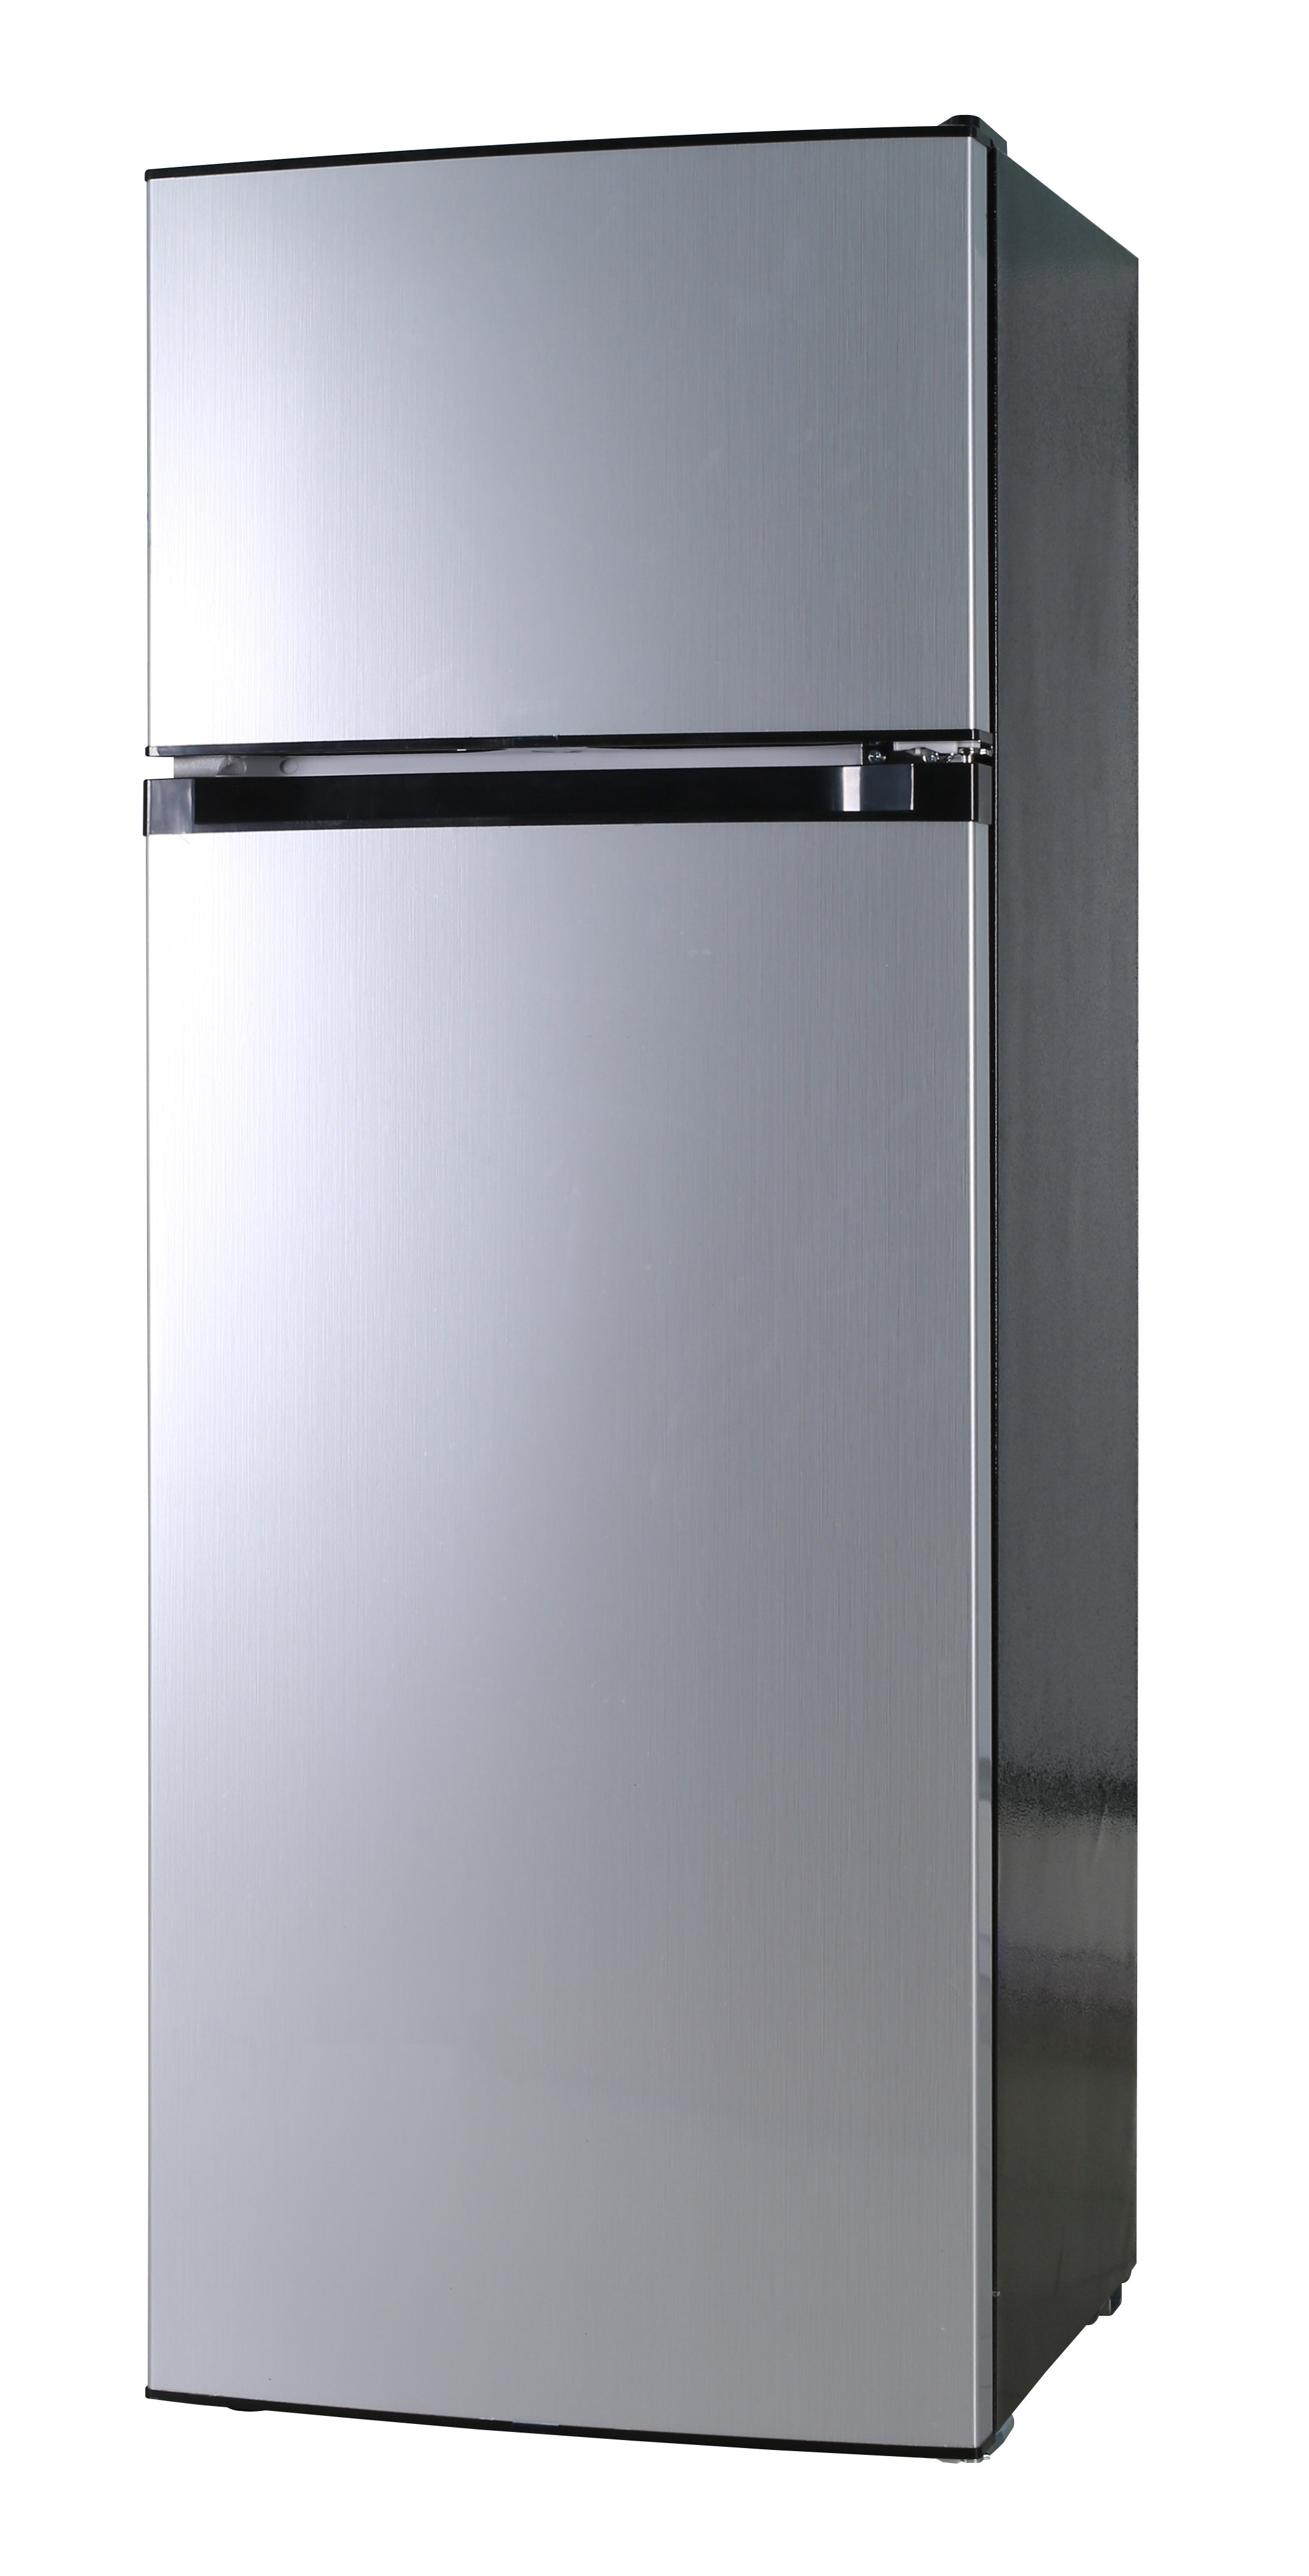 Frestec 7.4 CU' Refrigerator with Freezer, 2 Door Fridge with